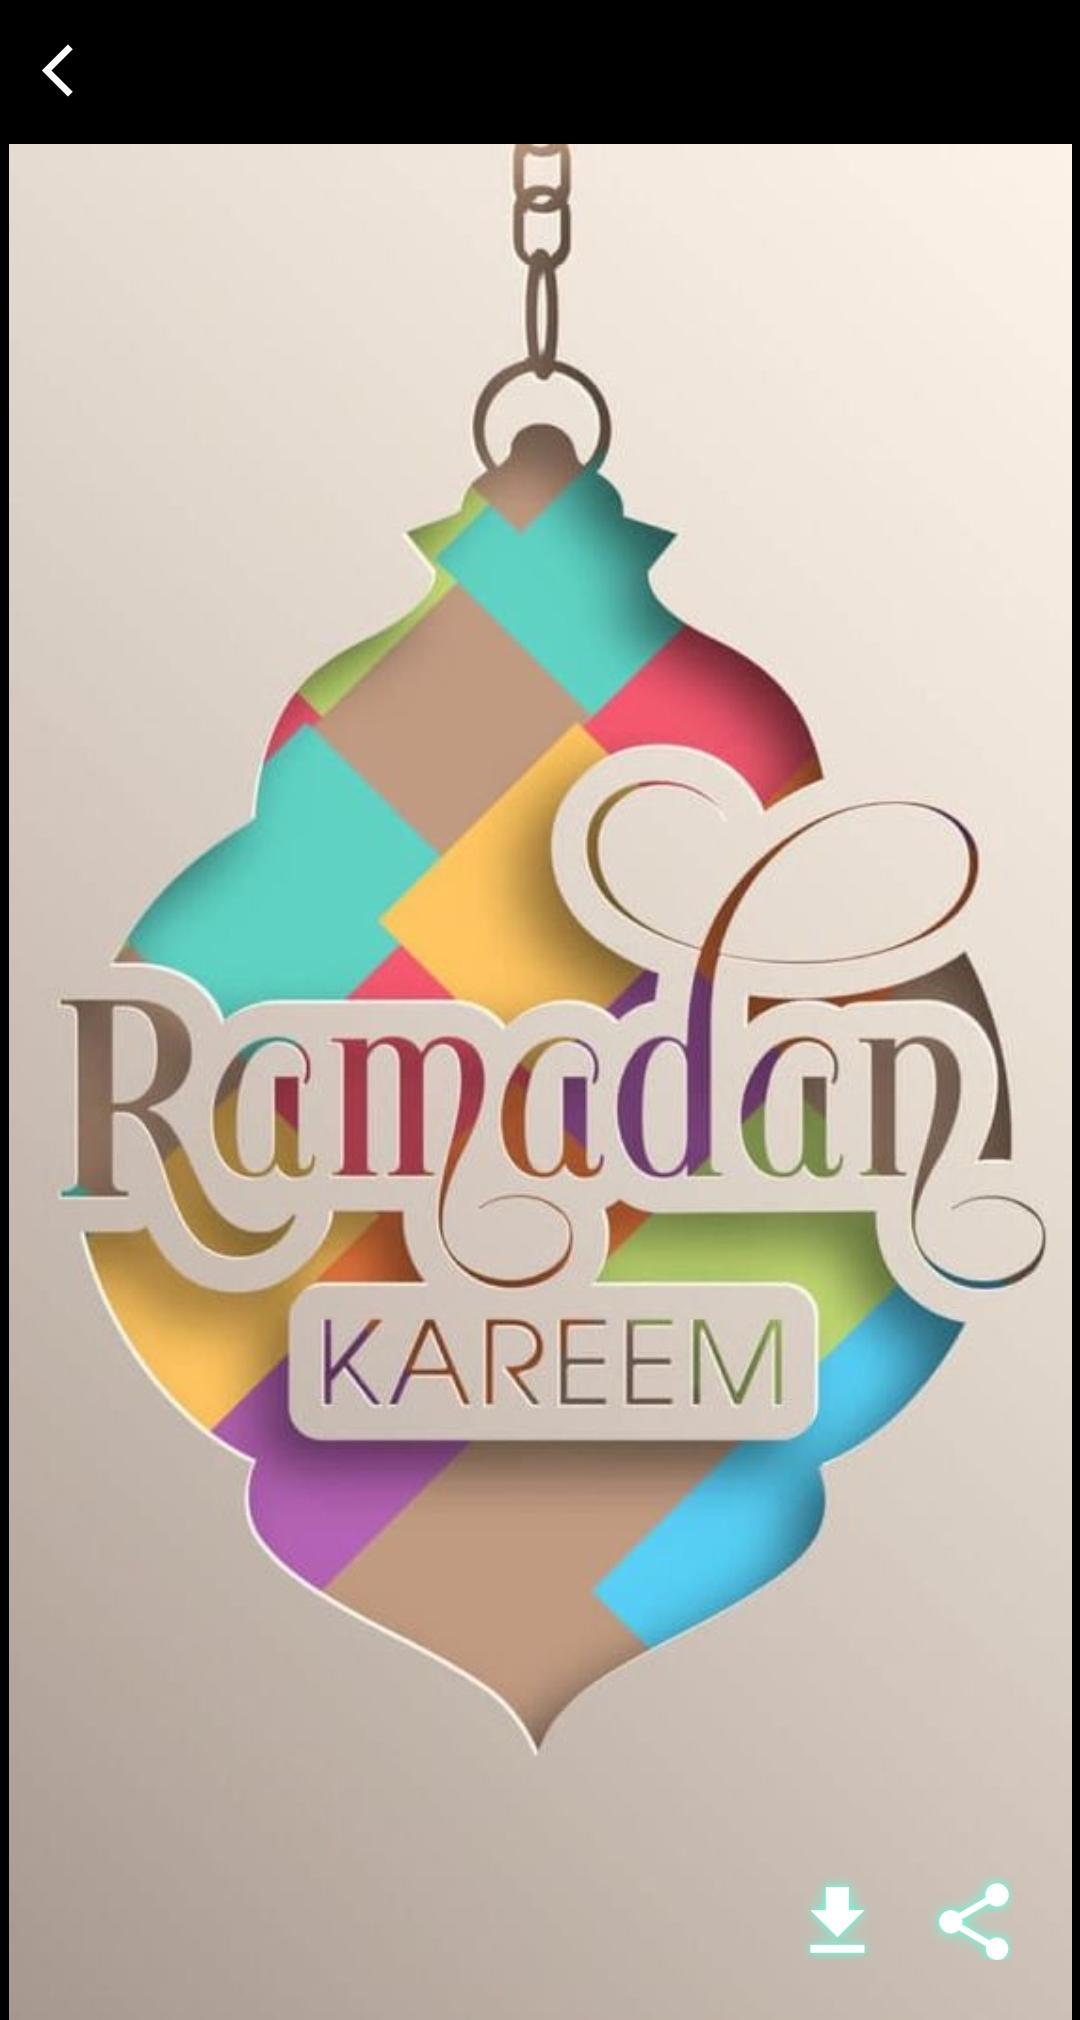 Ramadan Images  Free HD Backgrounds PNGs Vectors  Templates  rawpixel